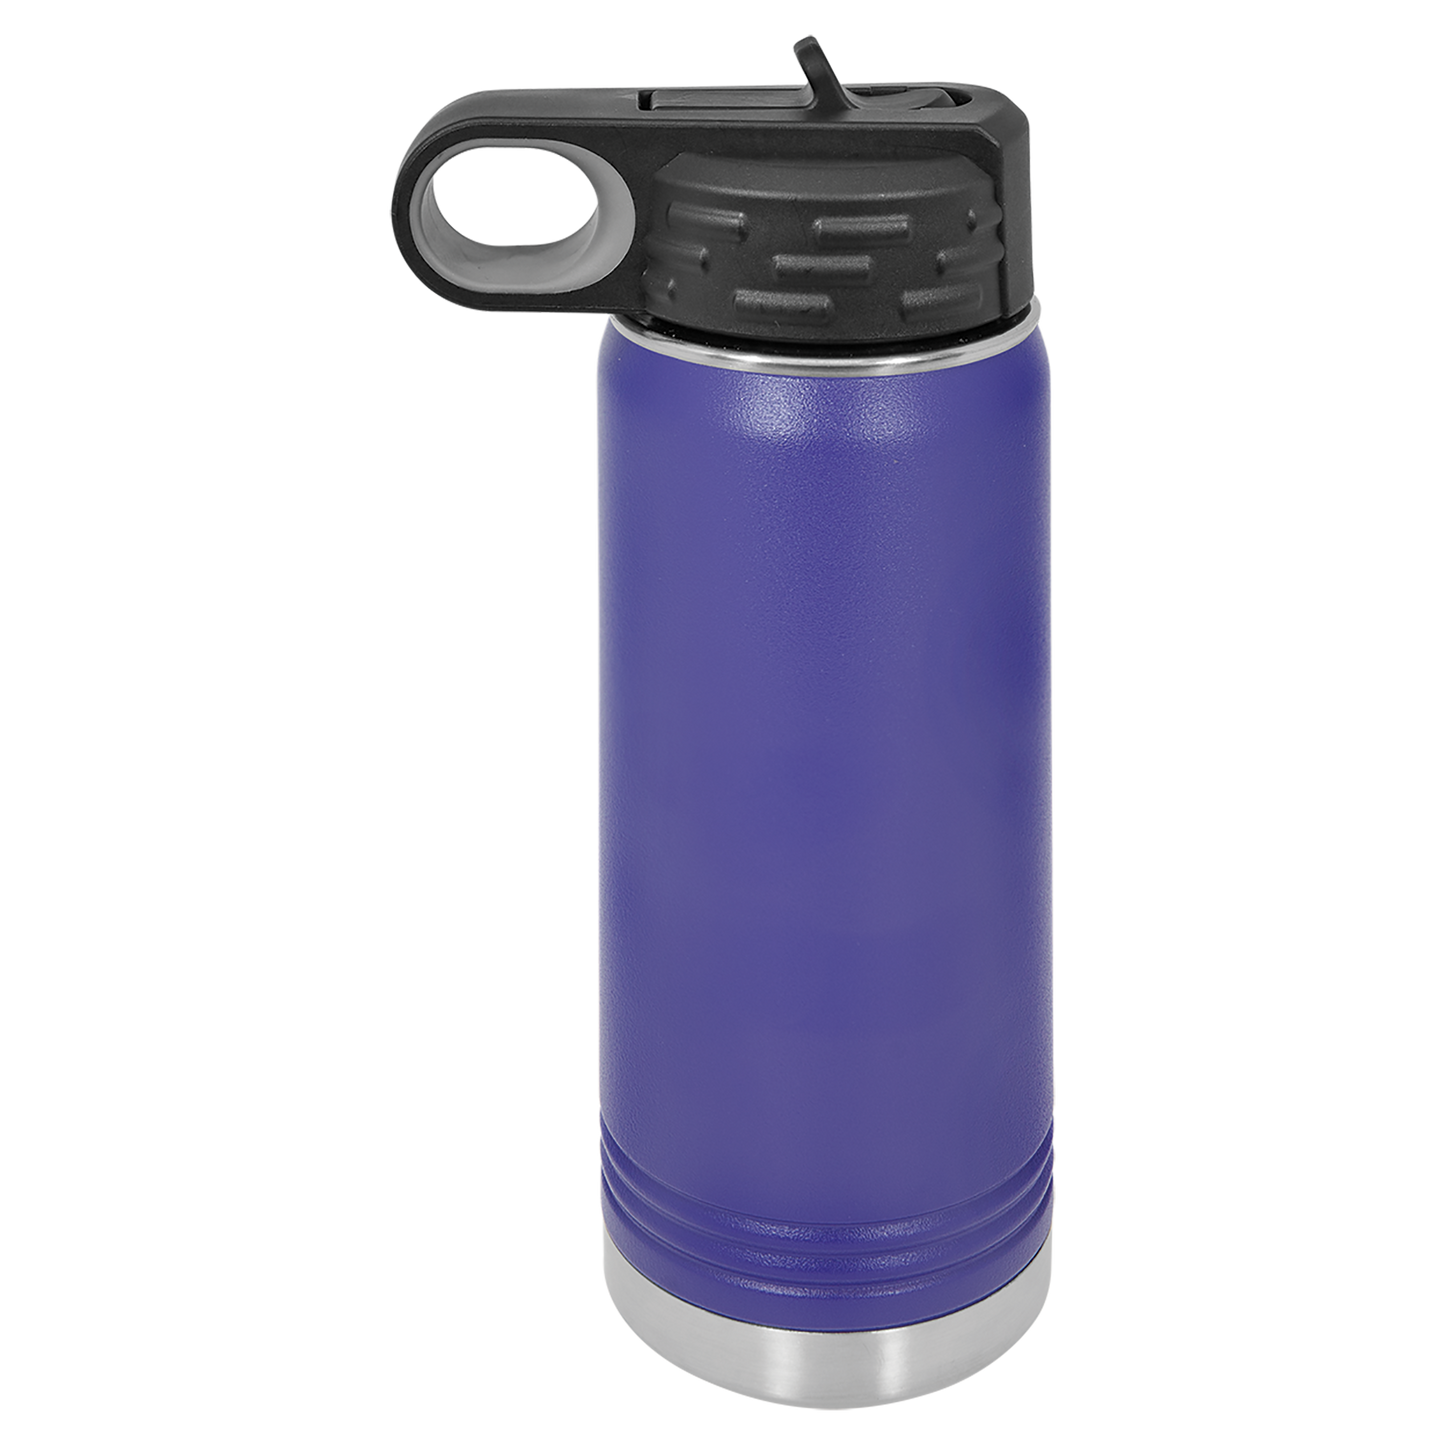 20 oz Water Bottle - Southwest Design #5